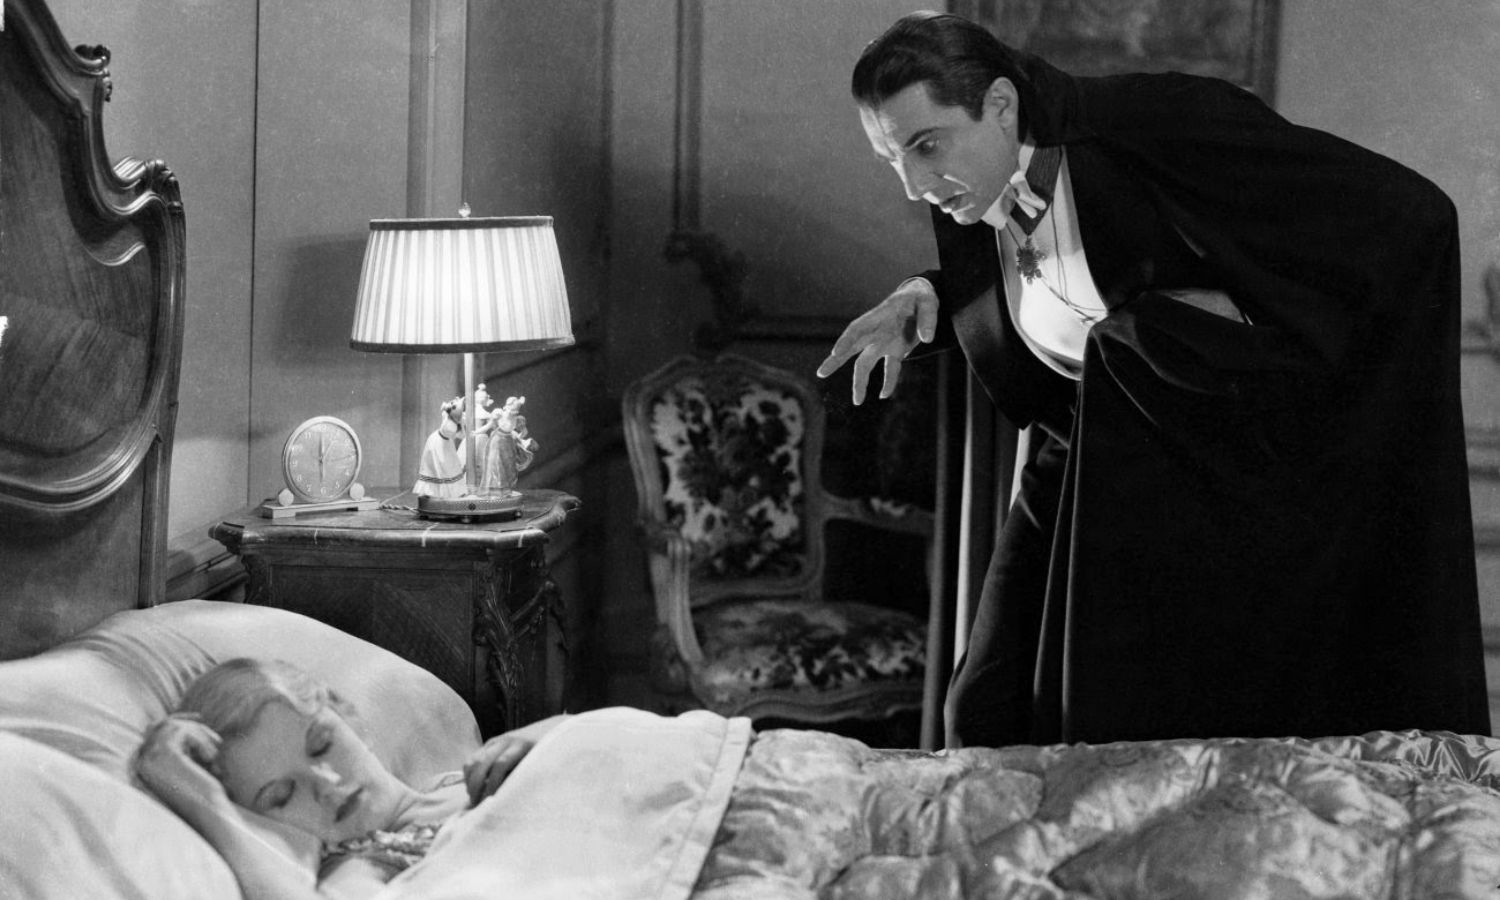 OTD in 1931: The original "Dracula" movie premiered in New York City